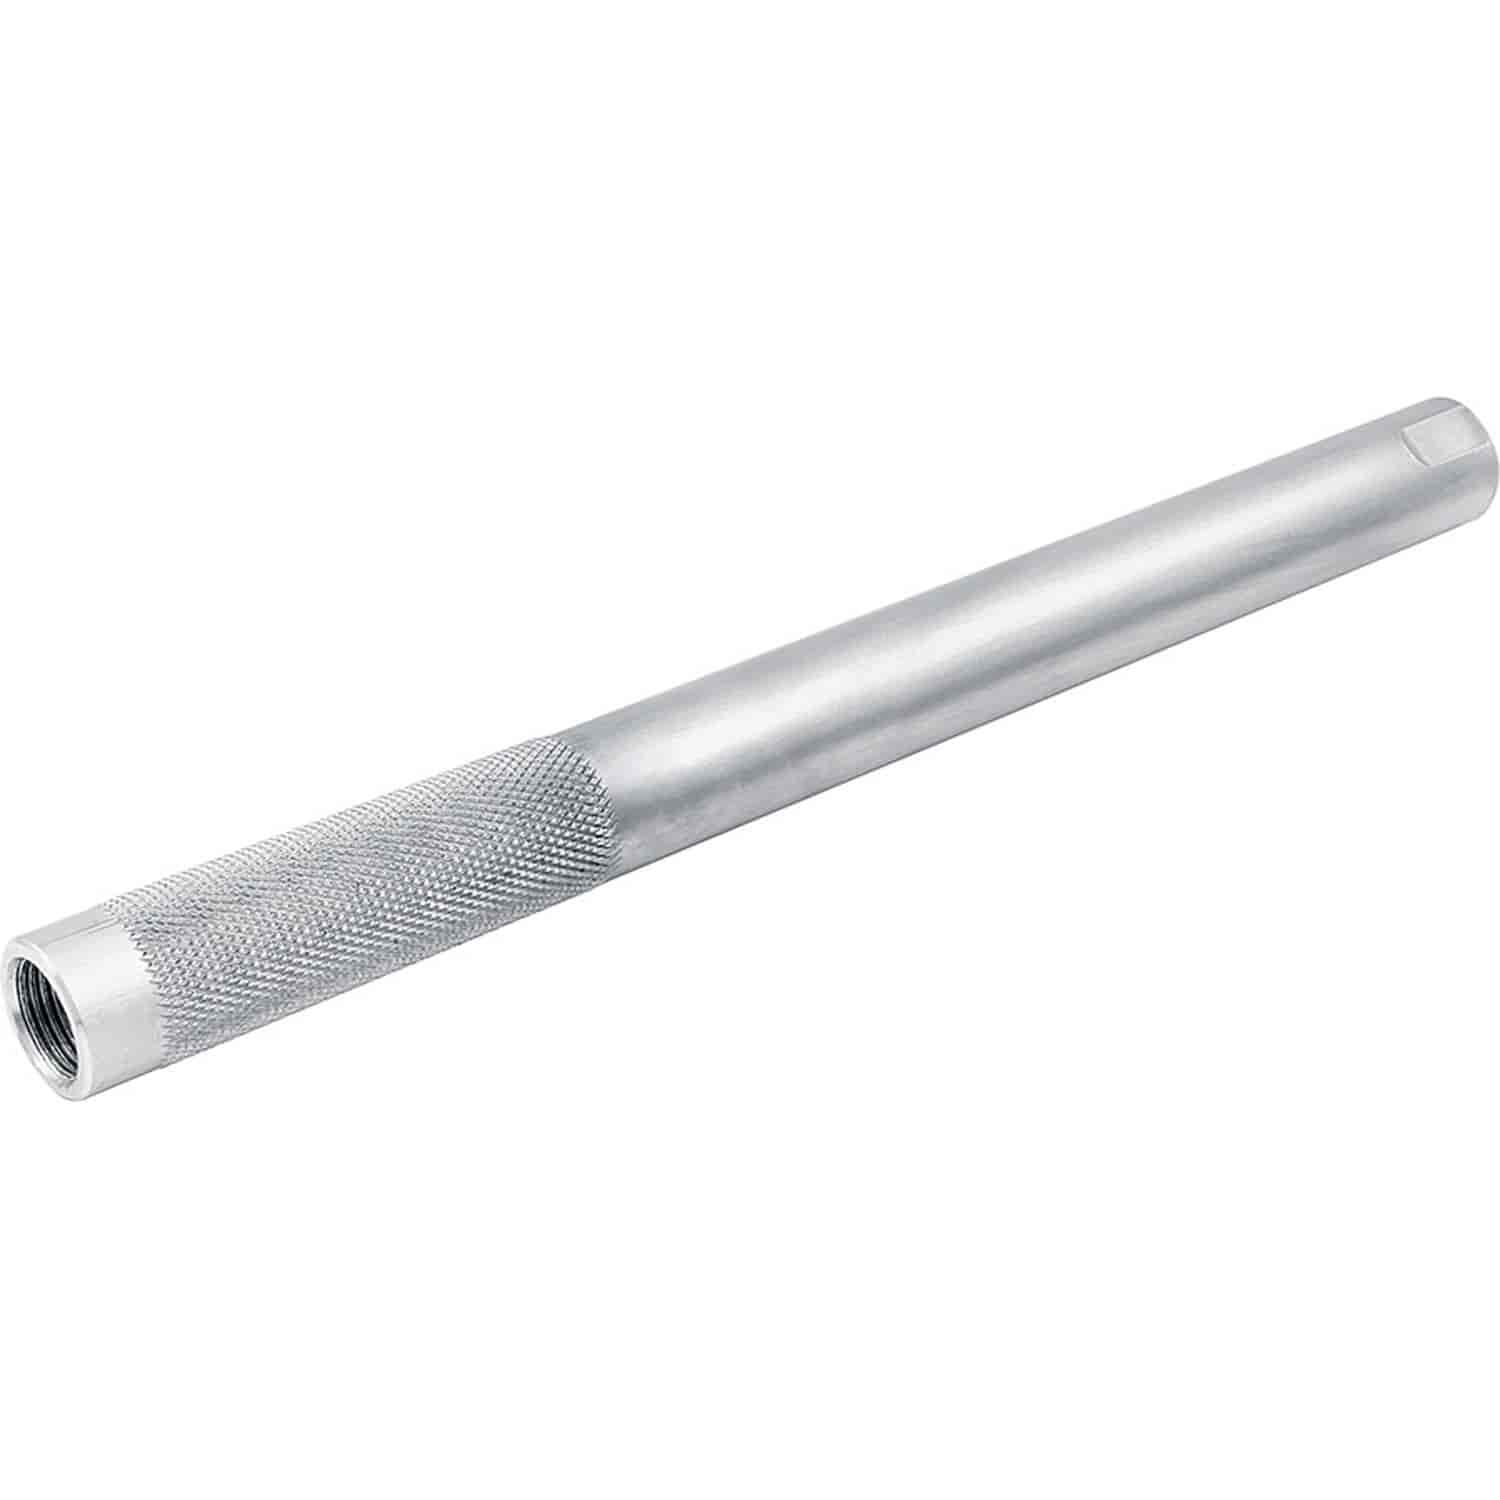 Swedged Aluminum Tie Rod Tube Length: 10"